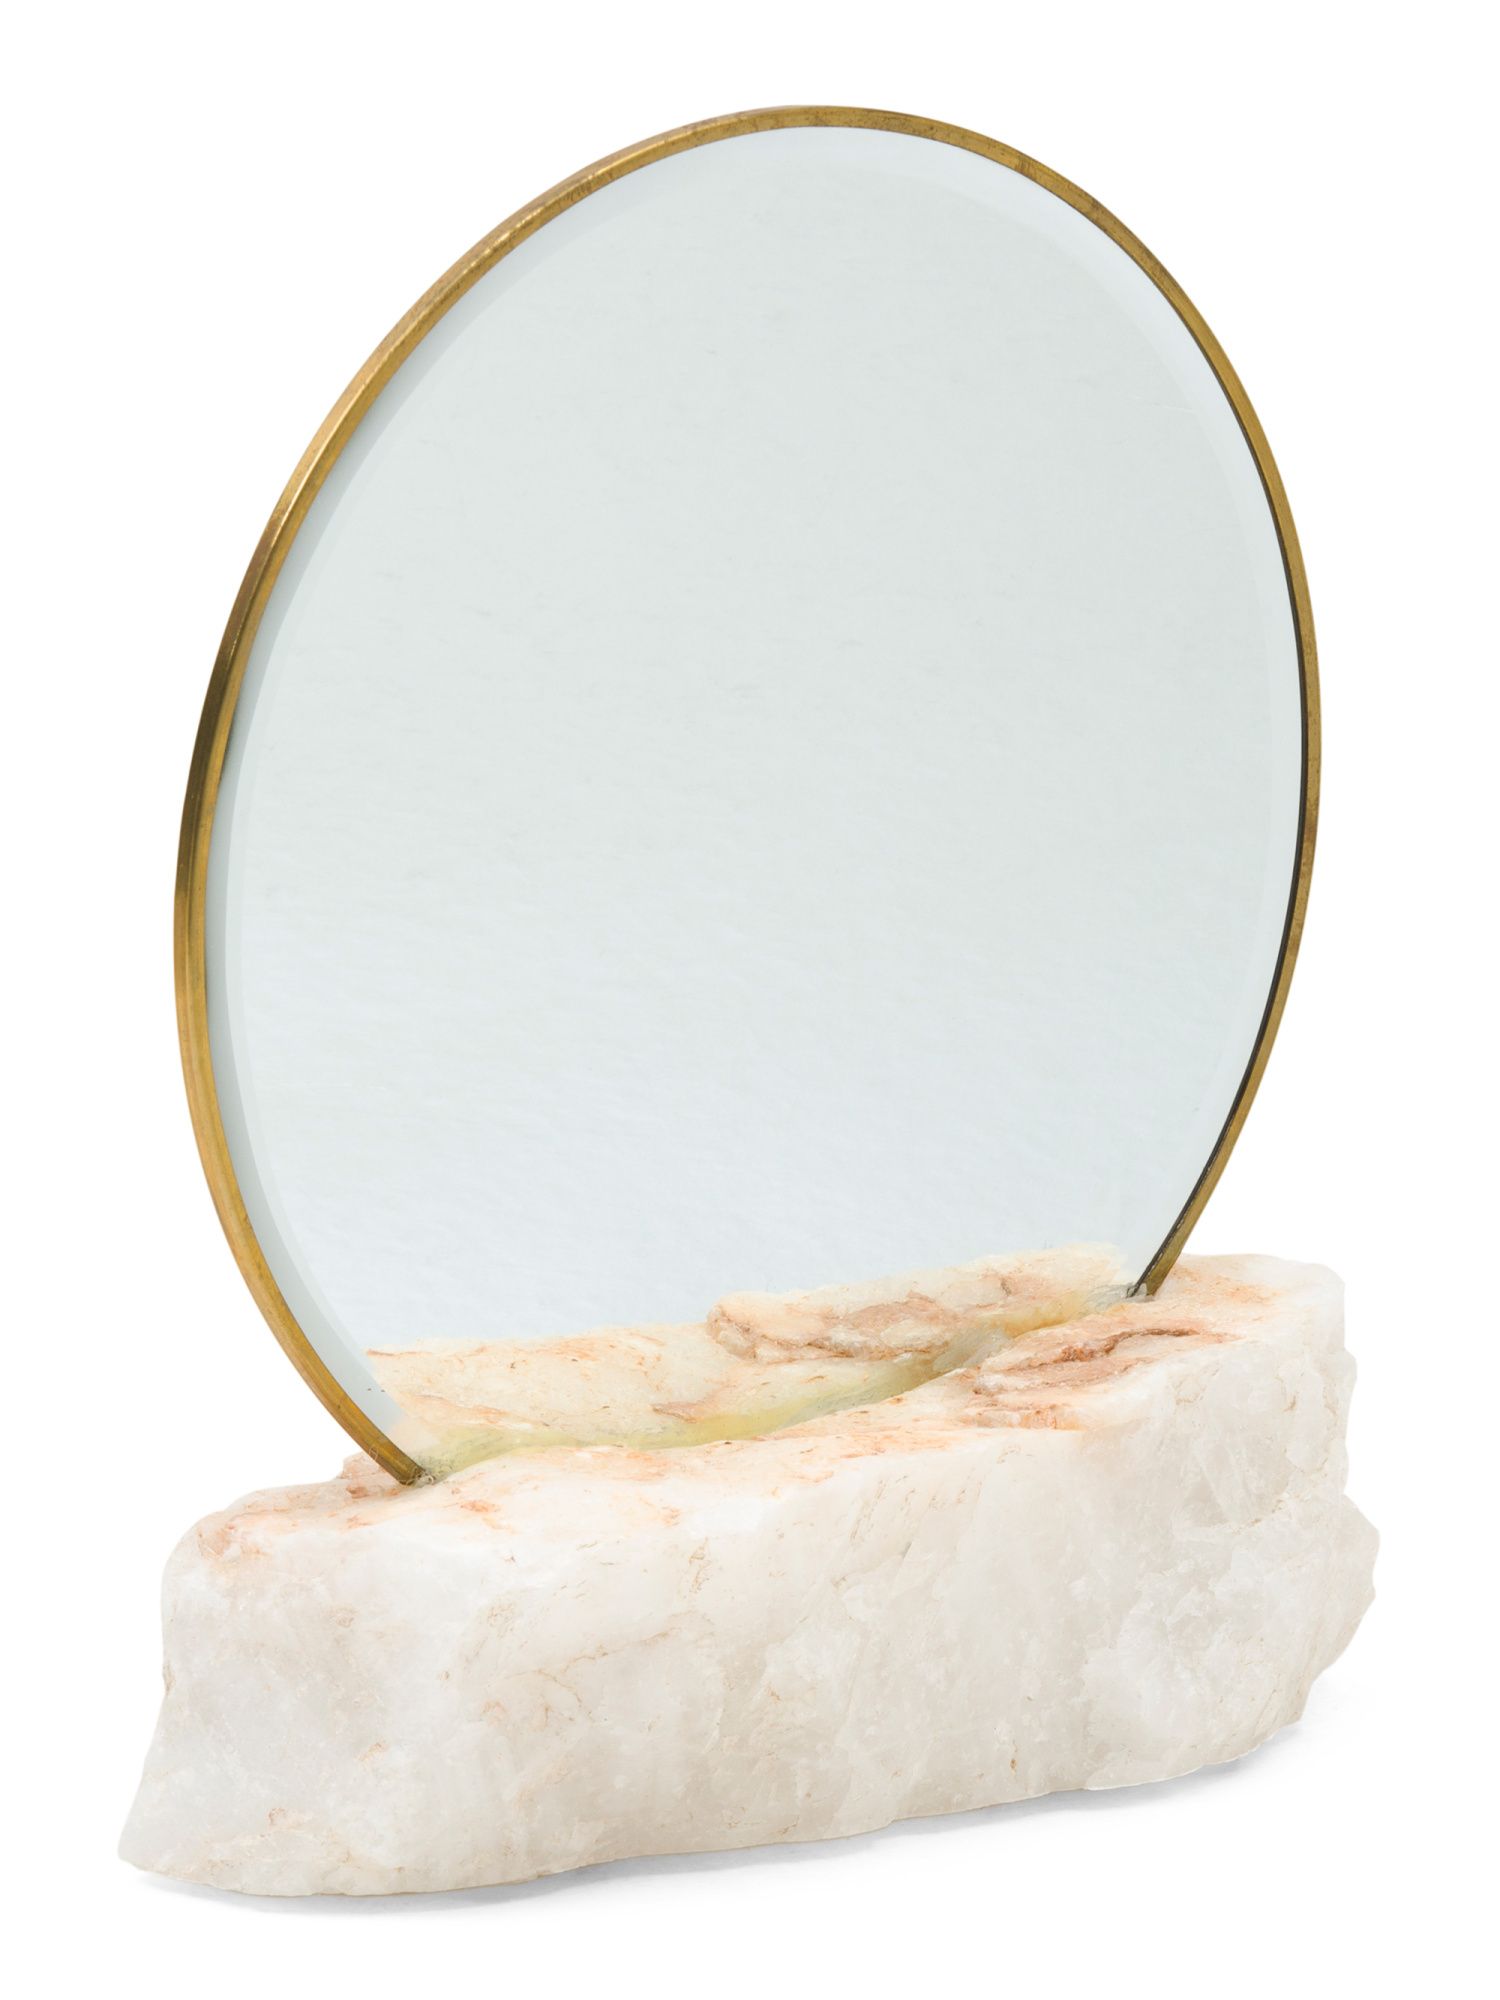 Mirror On Stone Base | TJ Maxx